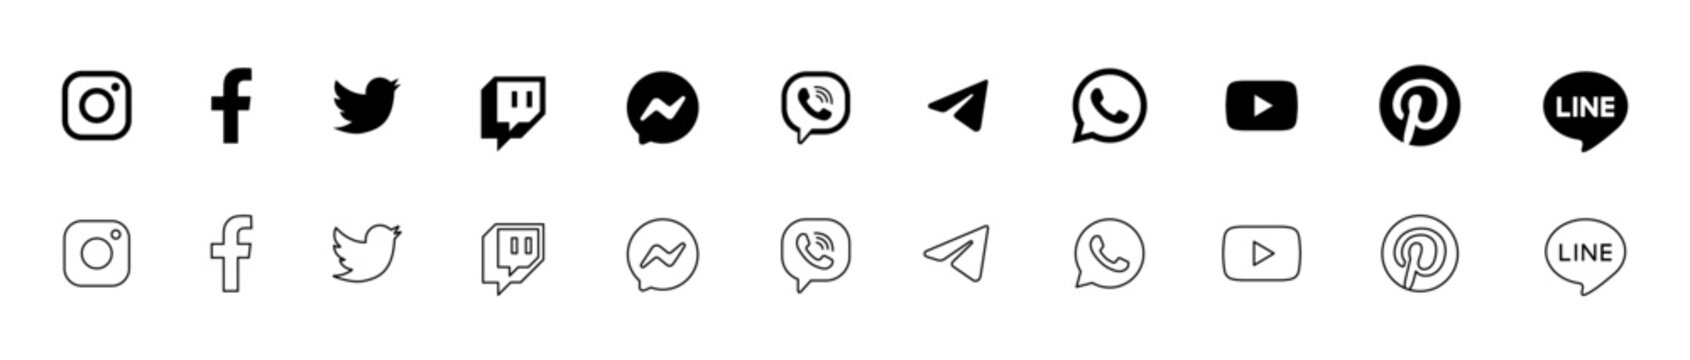 Instagram, Facebook, Twitter, Whatsapp, Youtube, Pinterest, Telegram, Twitch, Viber, Messenger, Line. Social media icon set. Editorial vector